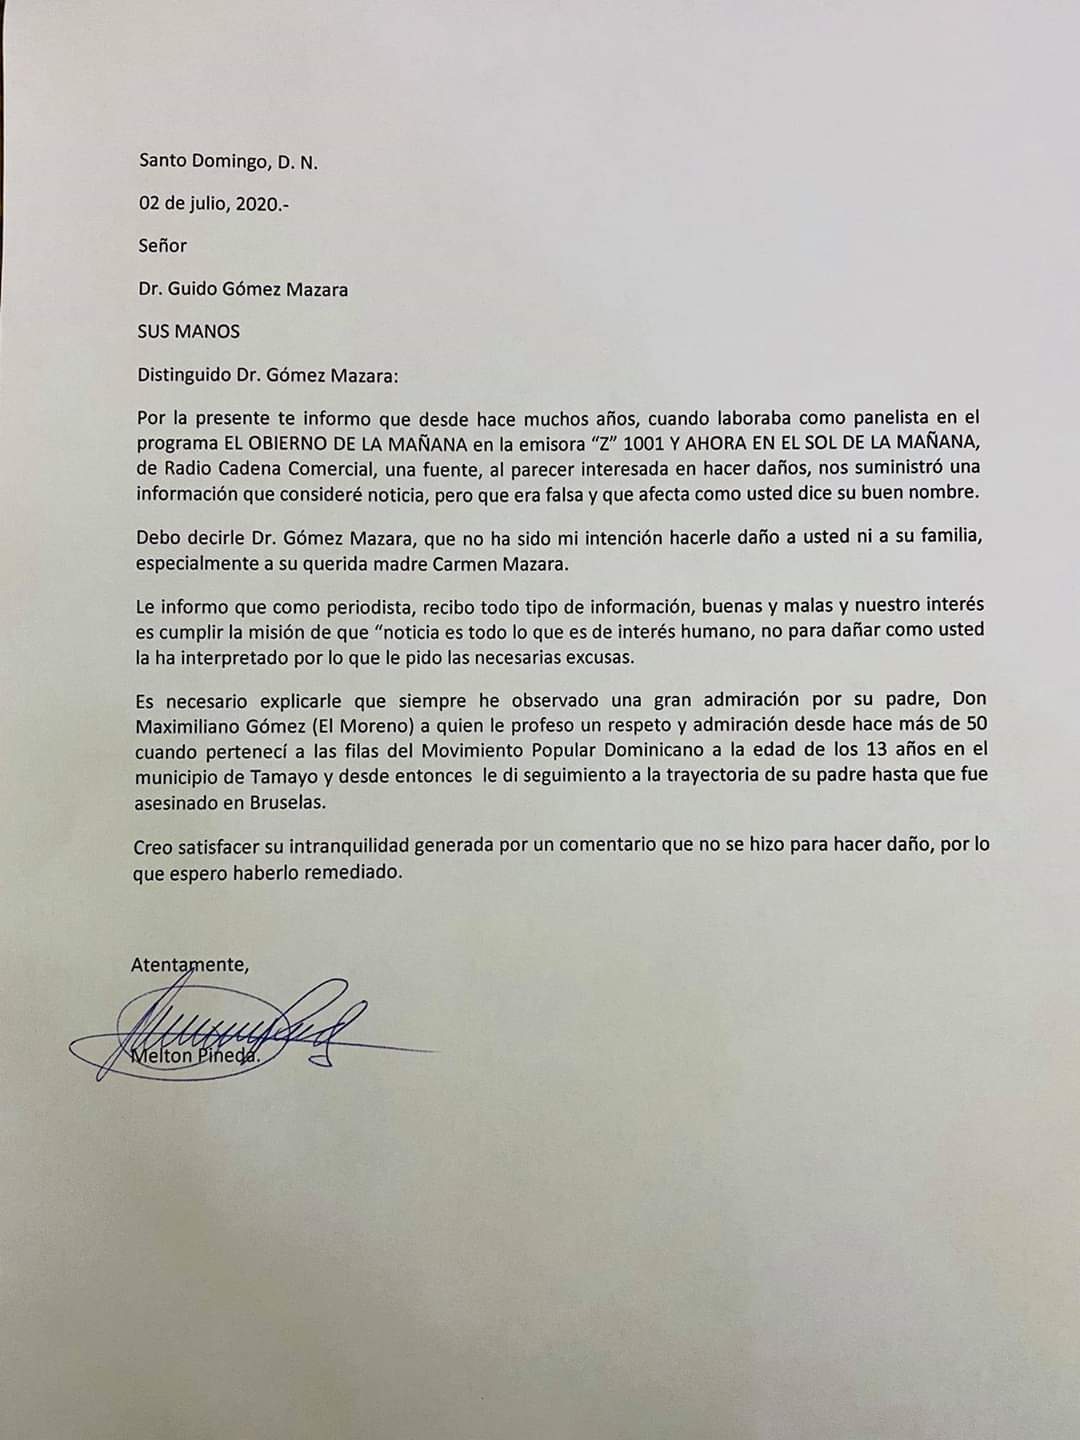  Melton Pineda pide excusas a Guido Gómez Mazar